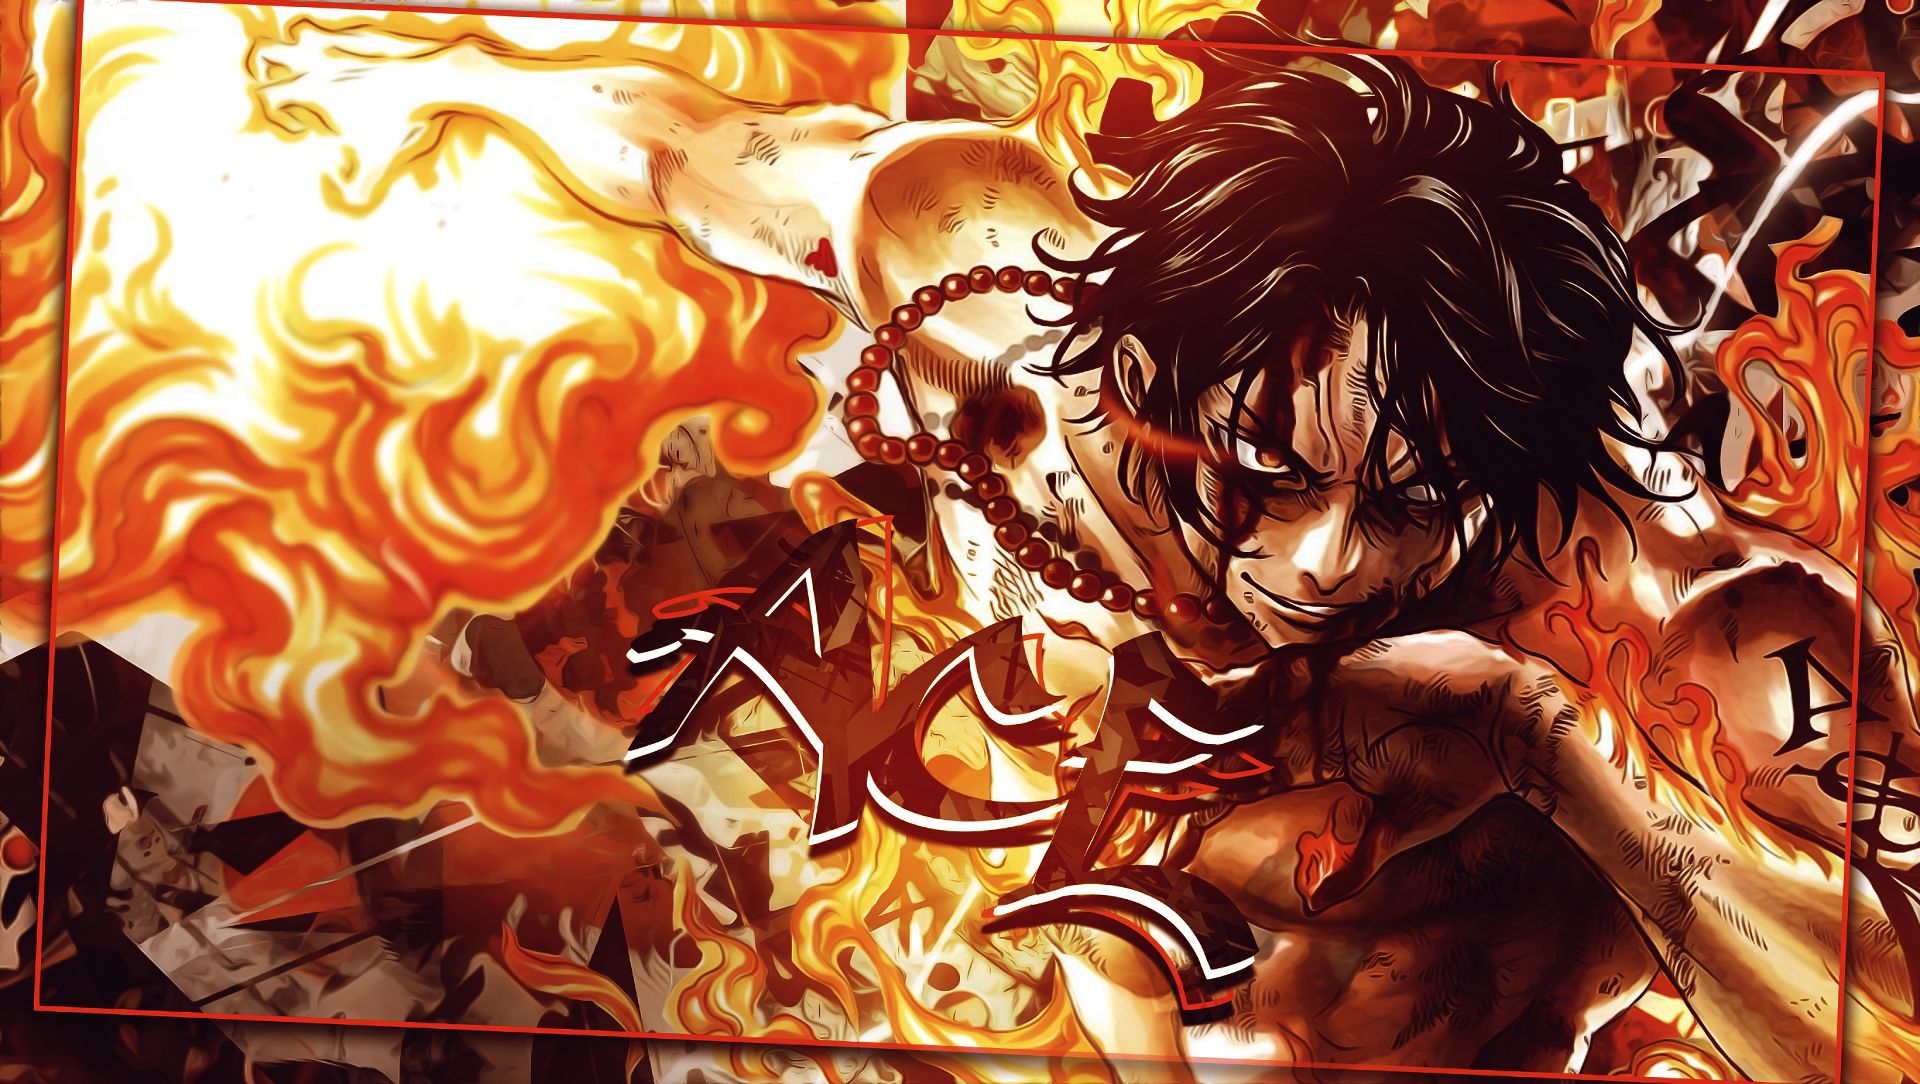 Handy-Wallpaper Animes, Portgas D Ace, One Piece kostenlos herunterladen.